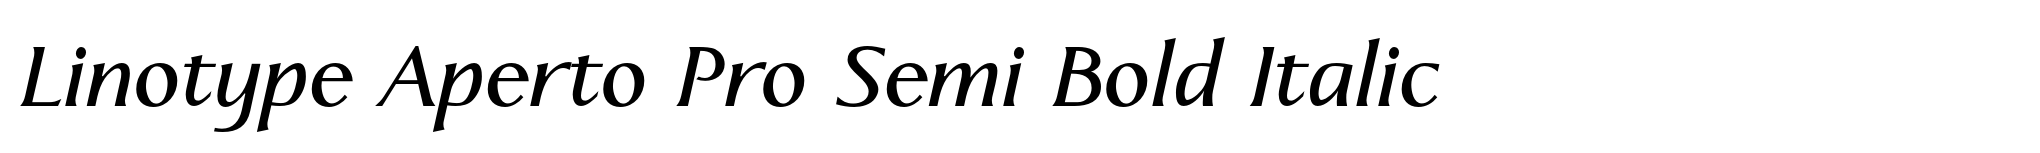 Linotype Aperto Pro Semi Bold Italic image